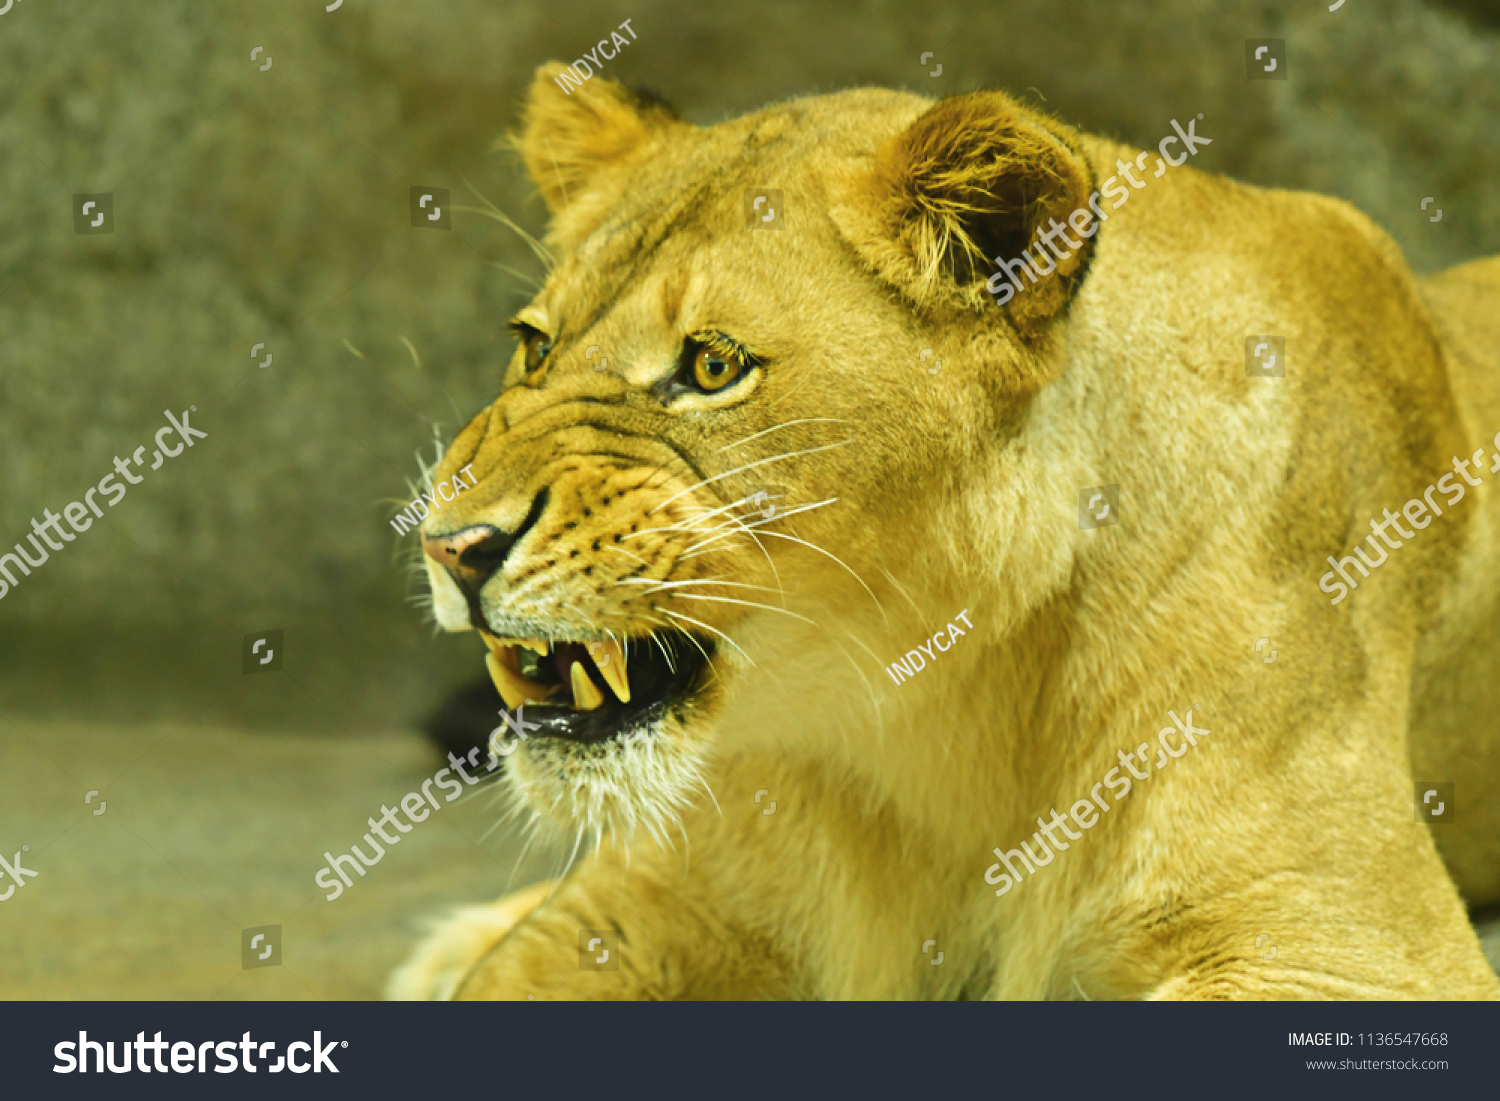 Close-up shot of roaring lion #1136547668